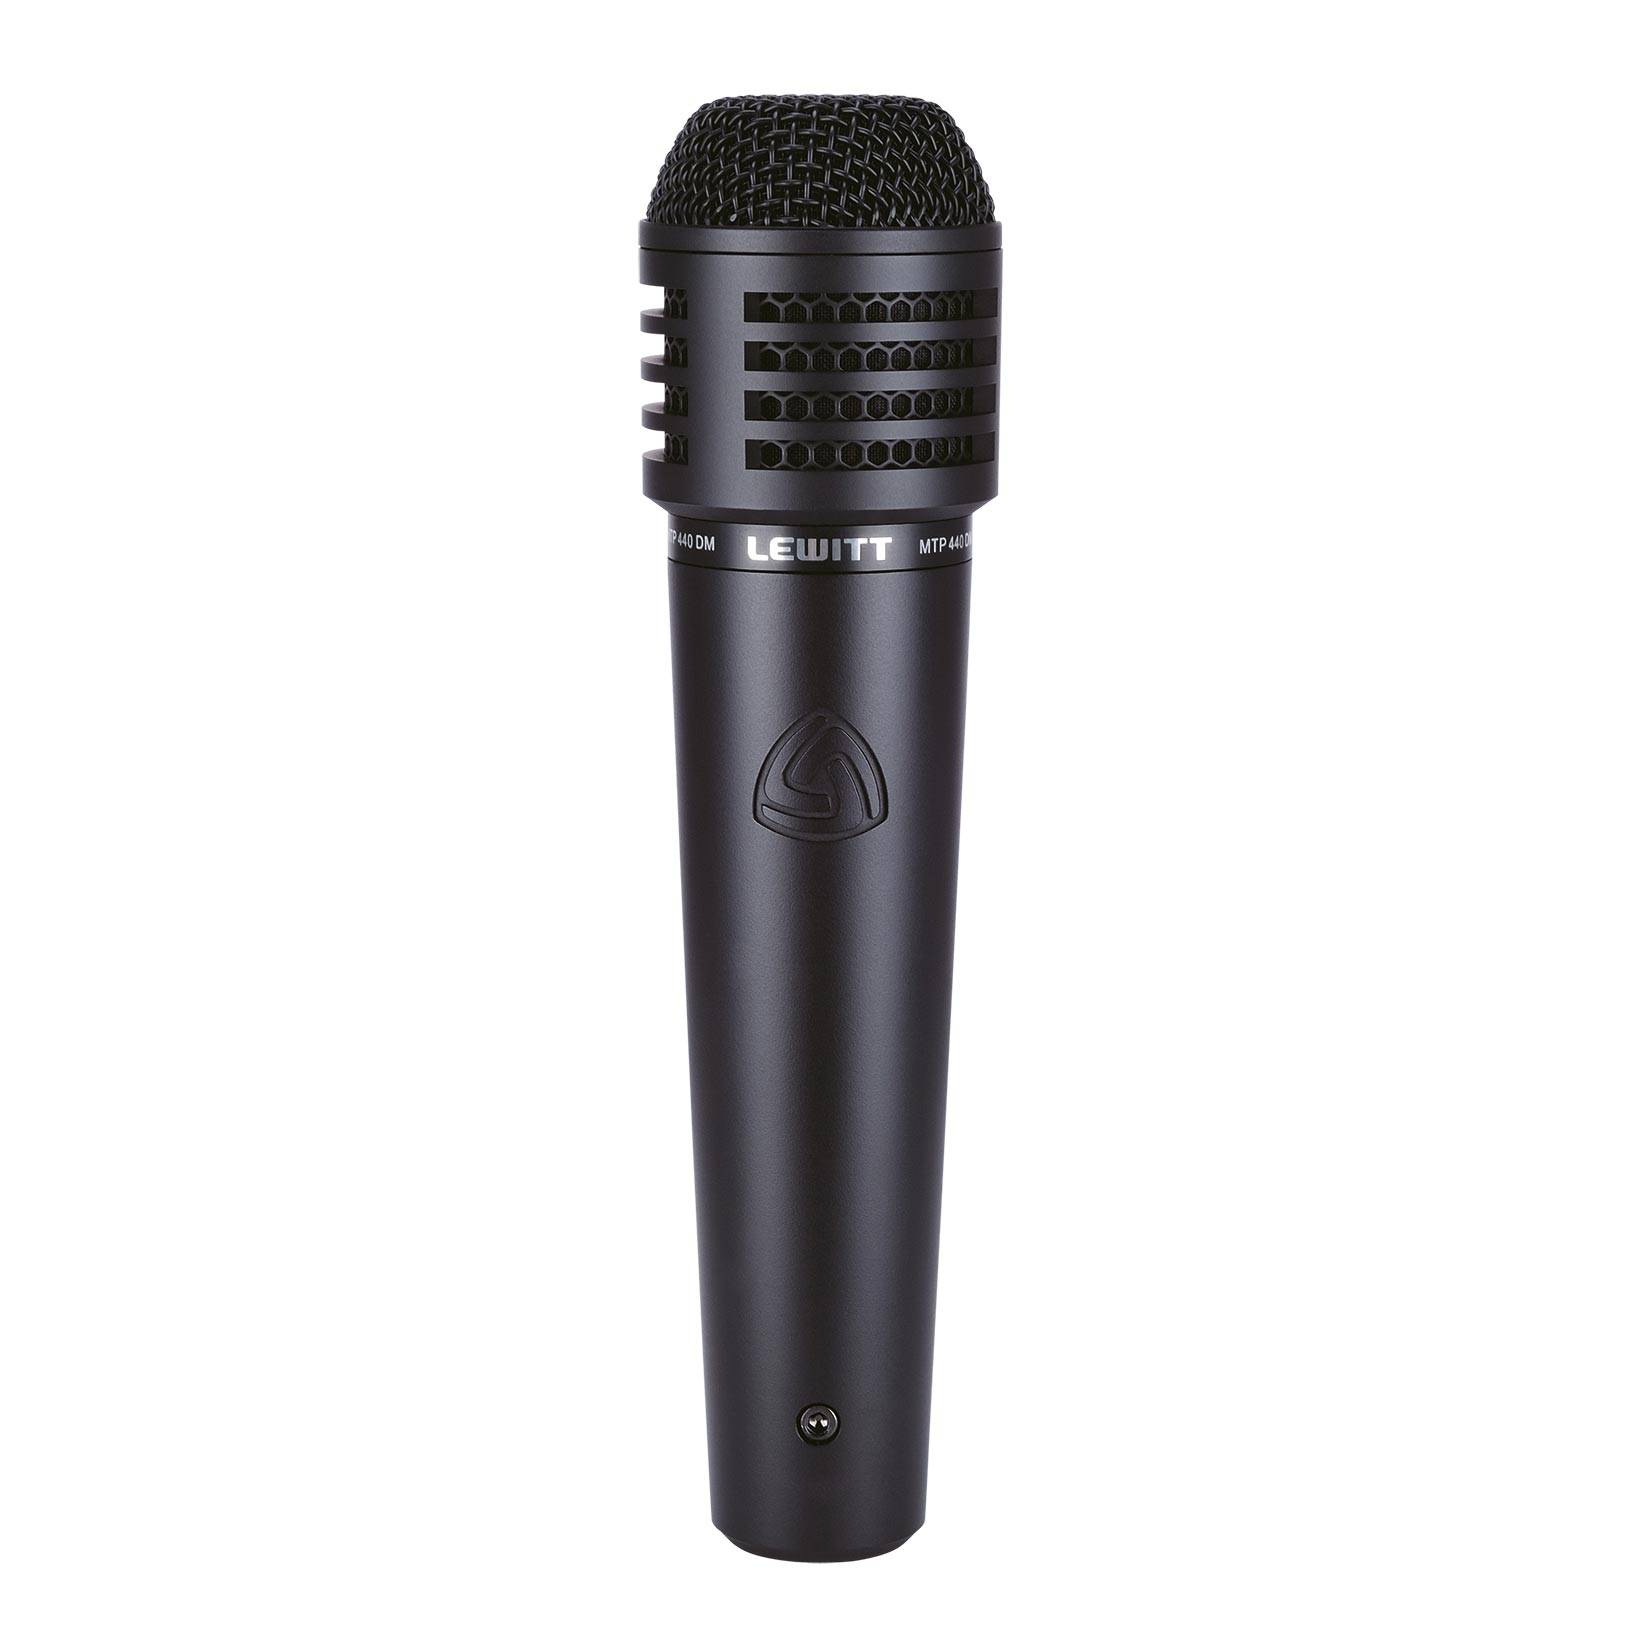 LEWITT MTP440DM Cardioid Dynamic Microphone